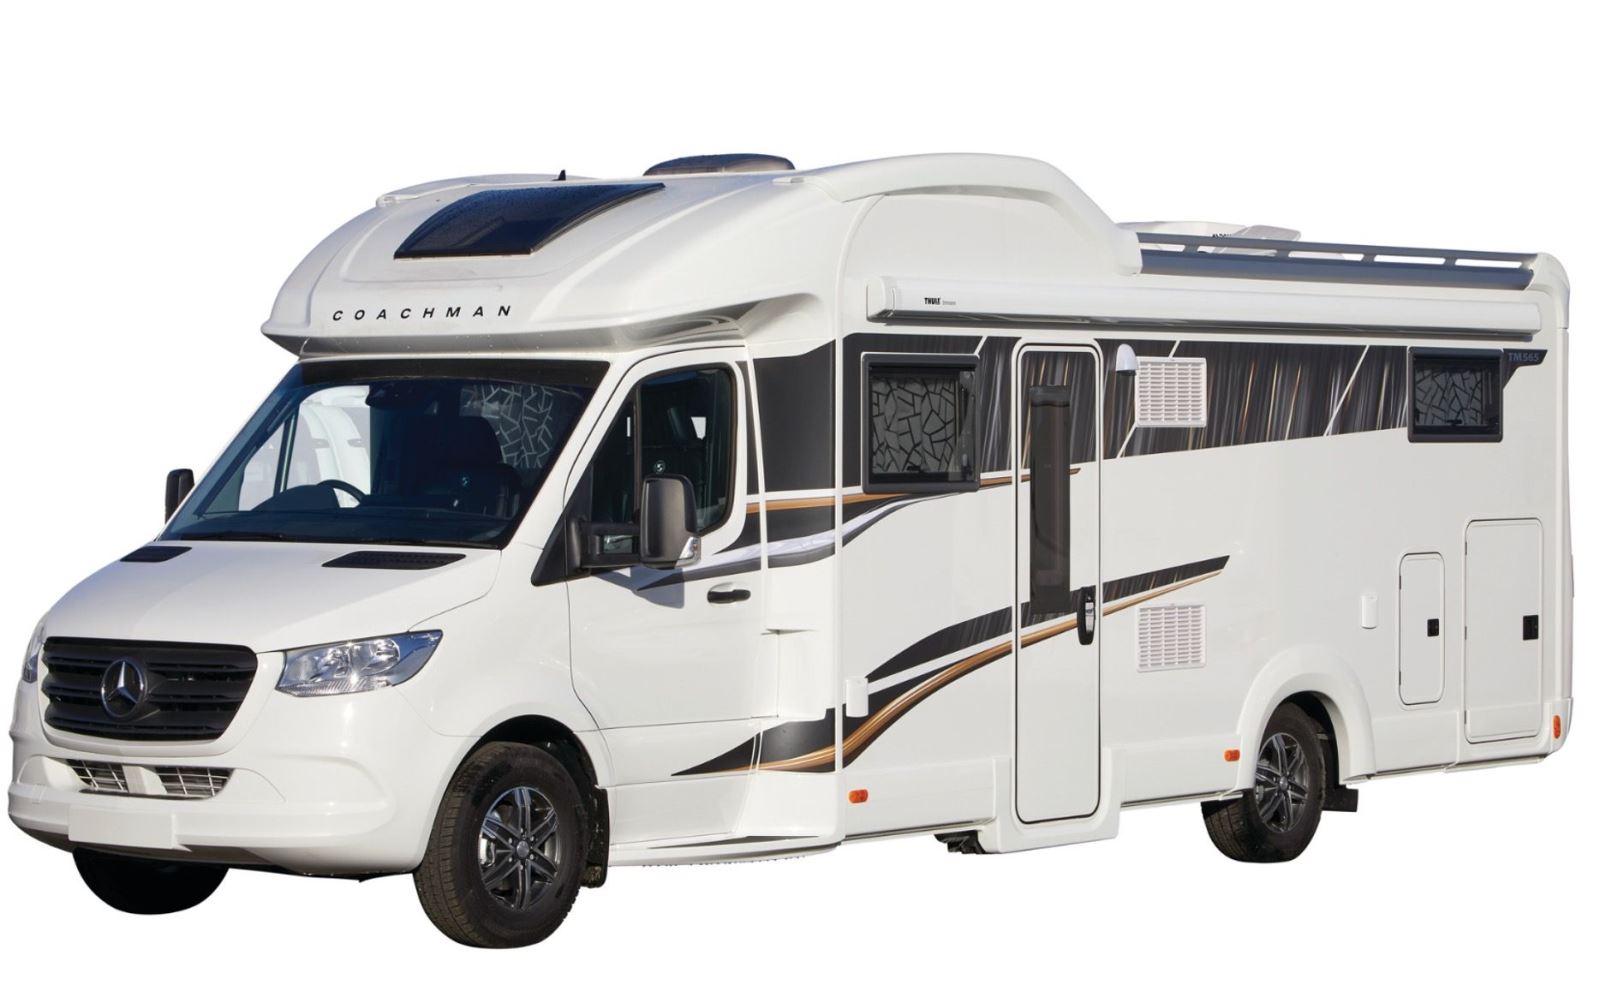 The Home of UK Based New Caravans & Motorhomes - Coachman